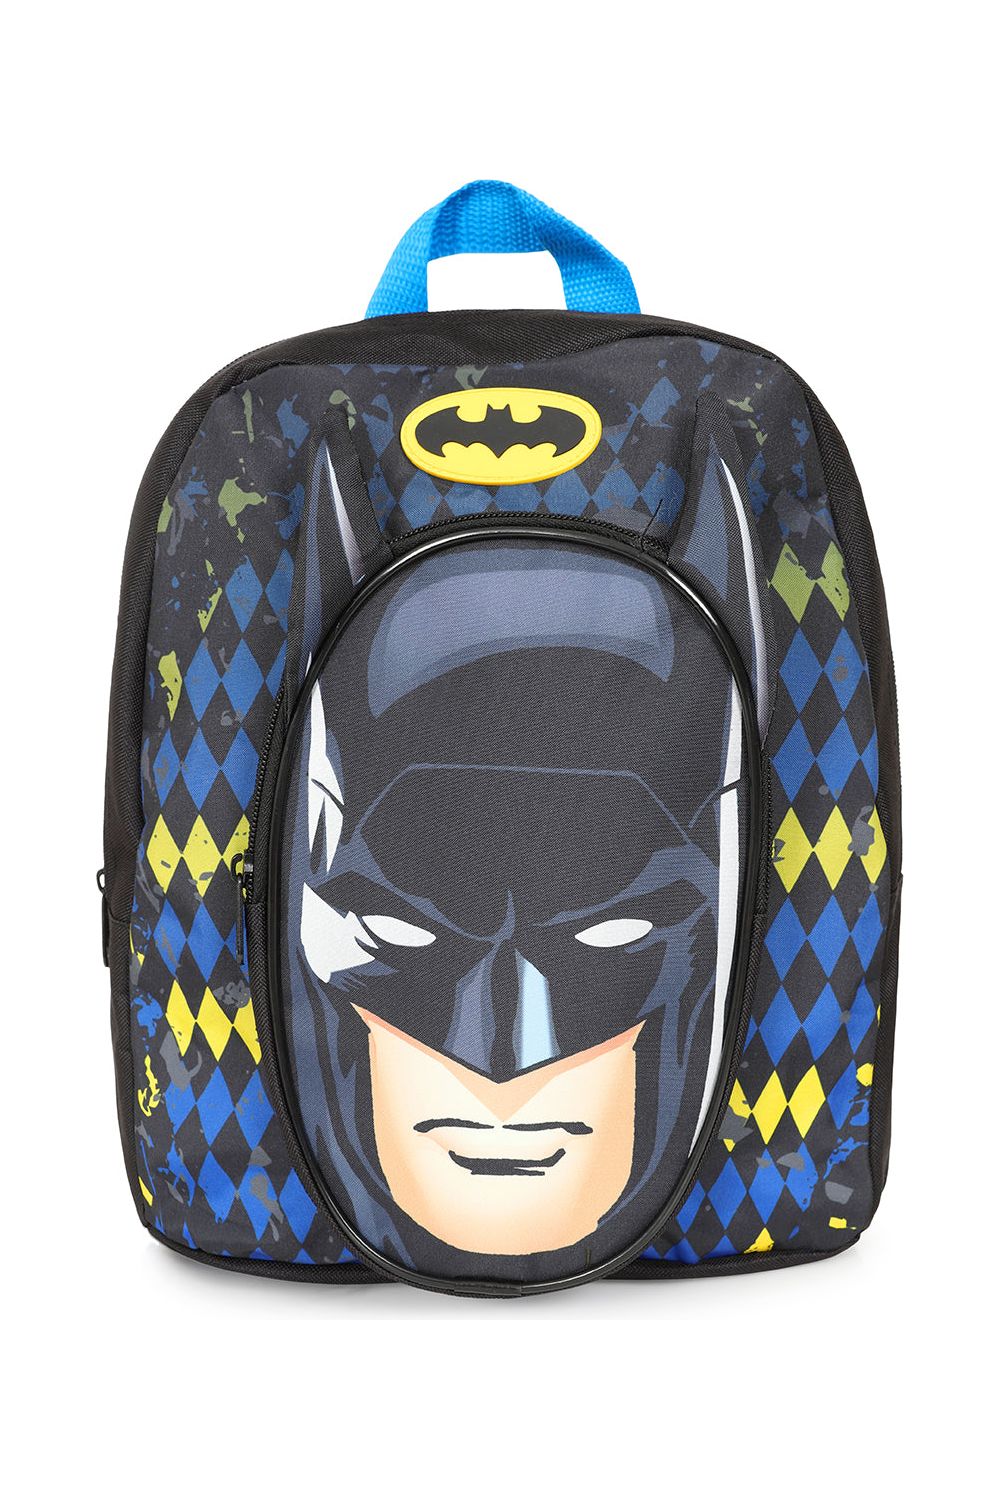 Official Boys DC Comics Batman Boys 3D School Backpack Lunch Travel Rucksack Bag